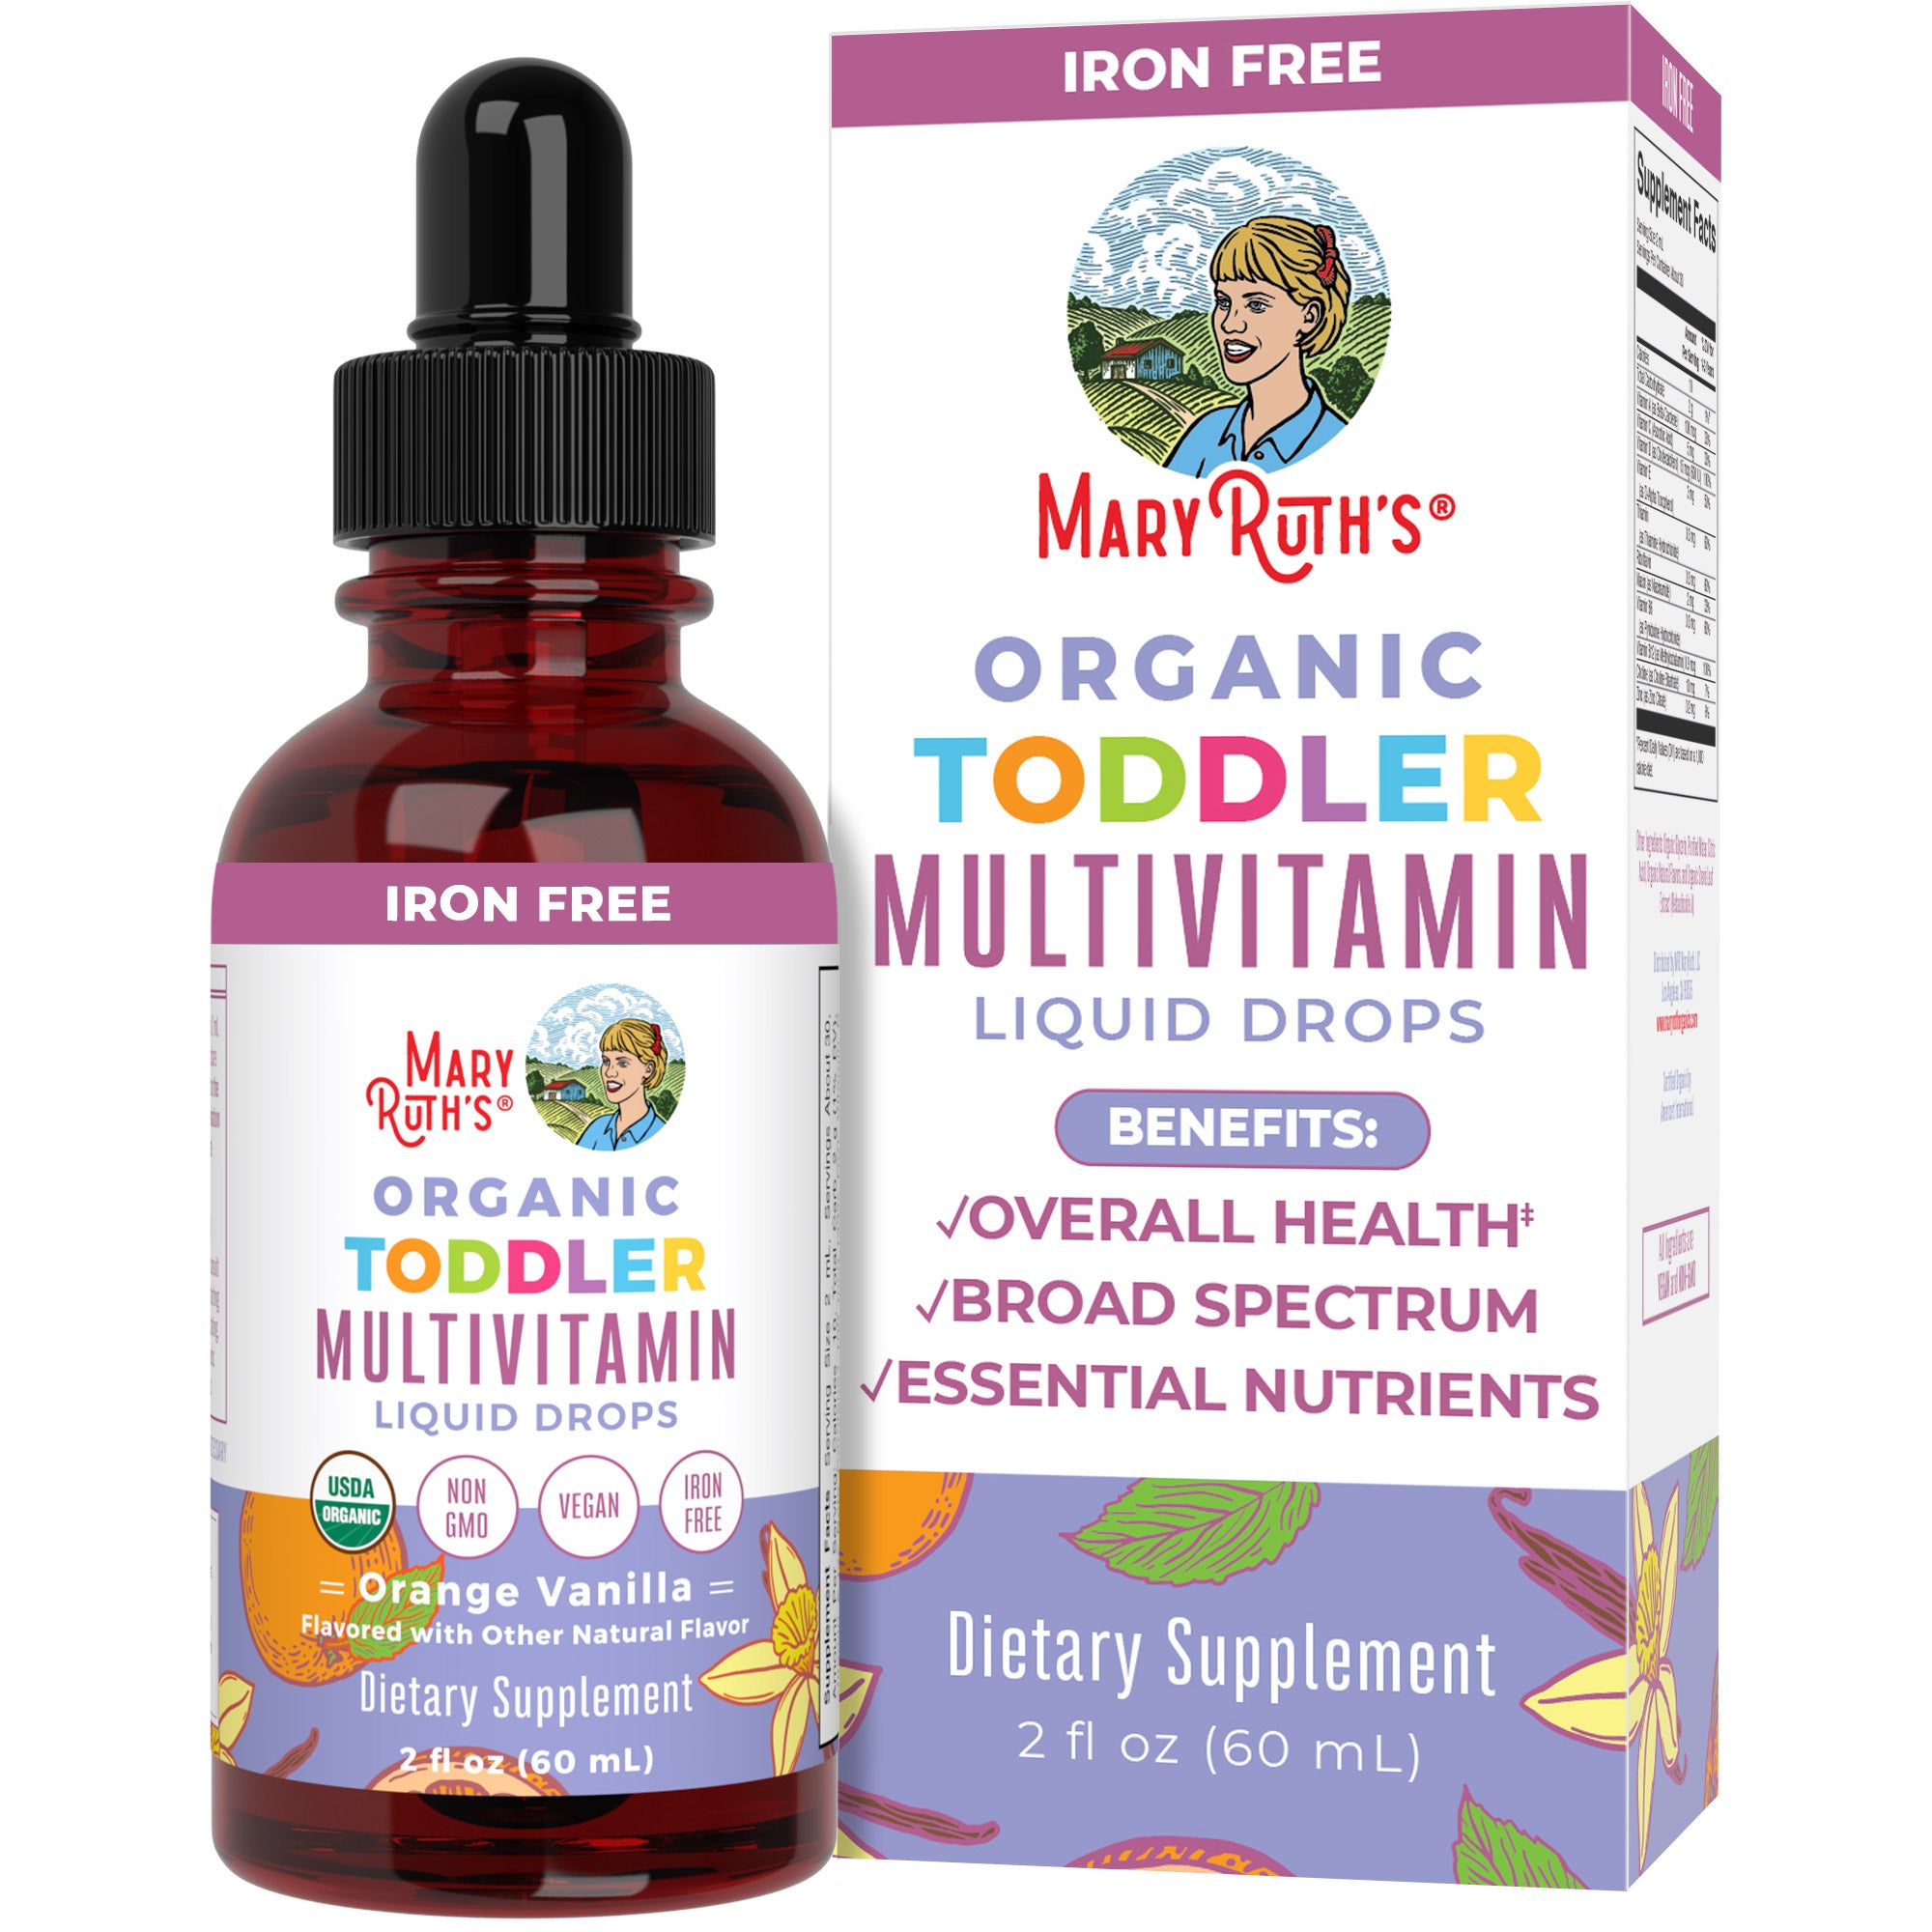 Organic Toddler Multivitamin Liquid Drops